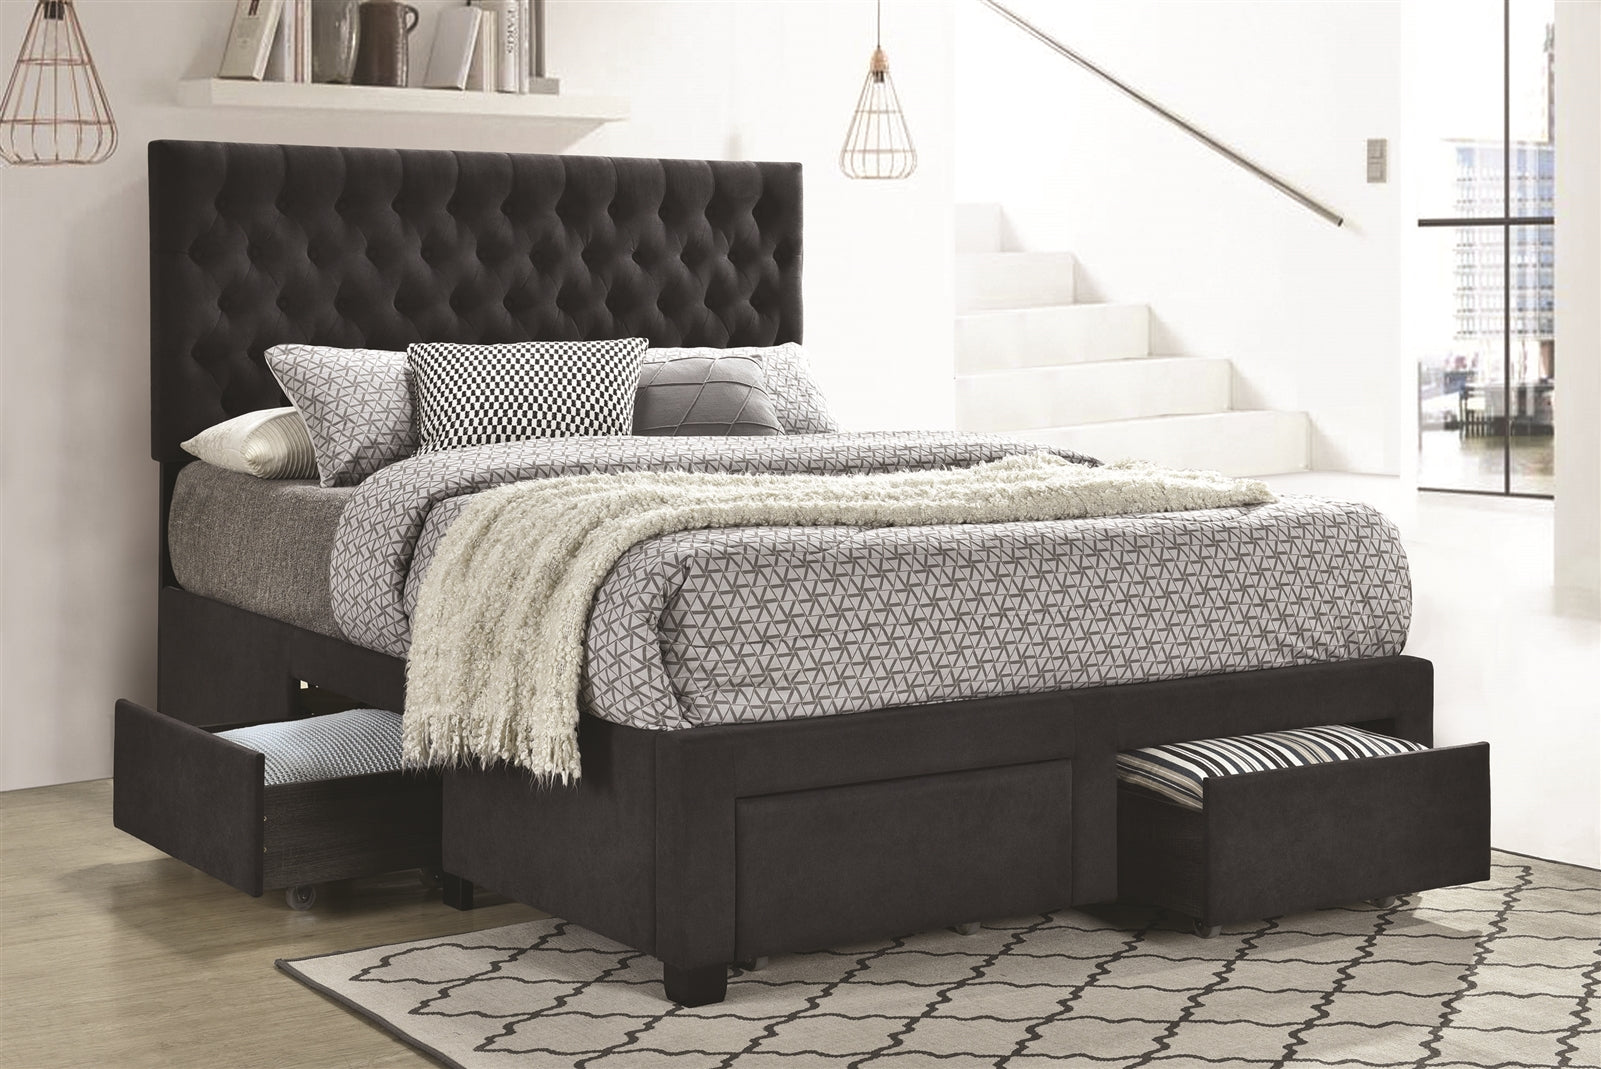 Lompoc Charcoal Upholstered Full Storage Bed